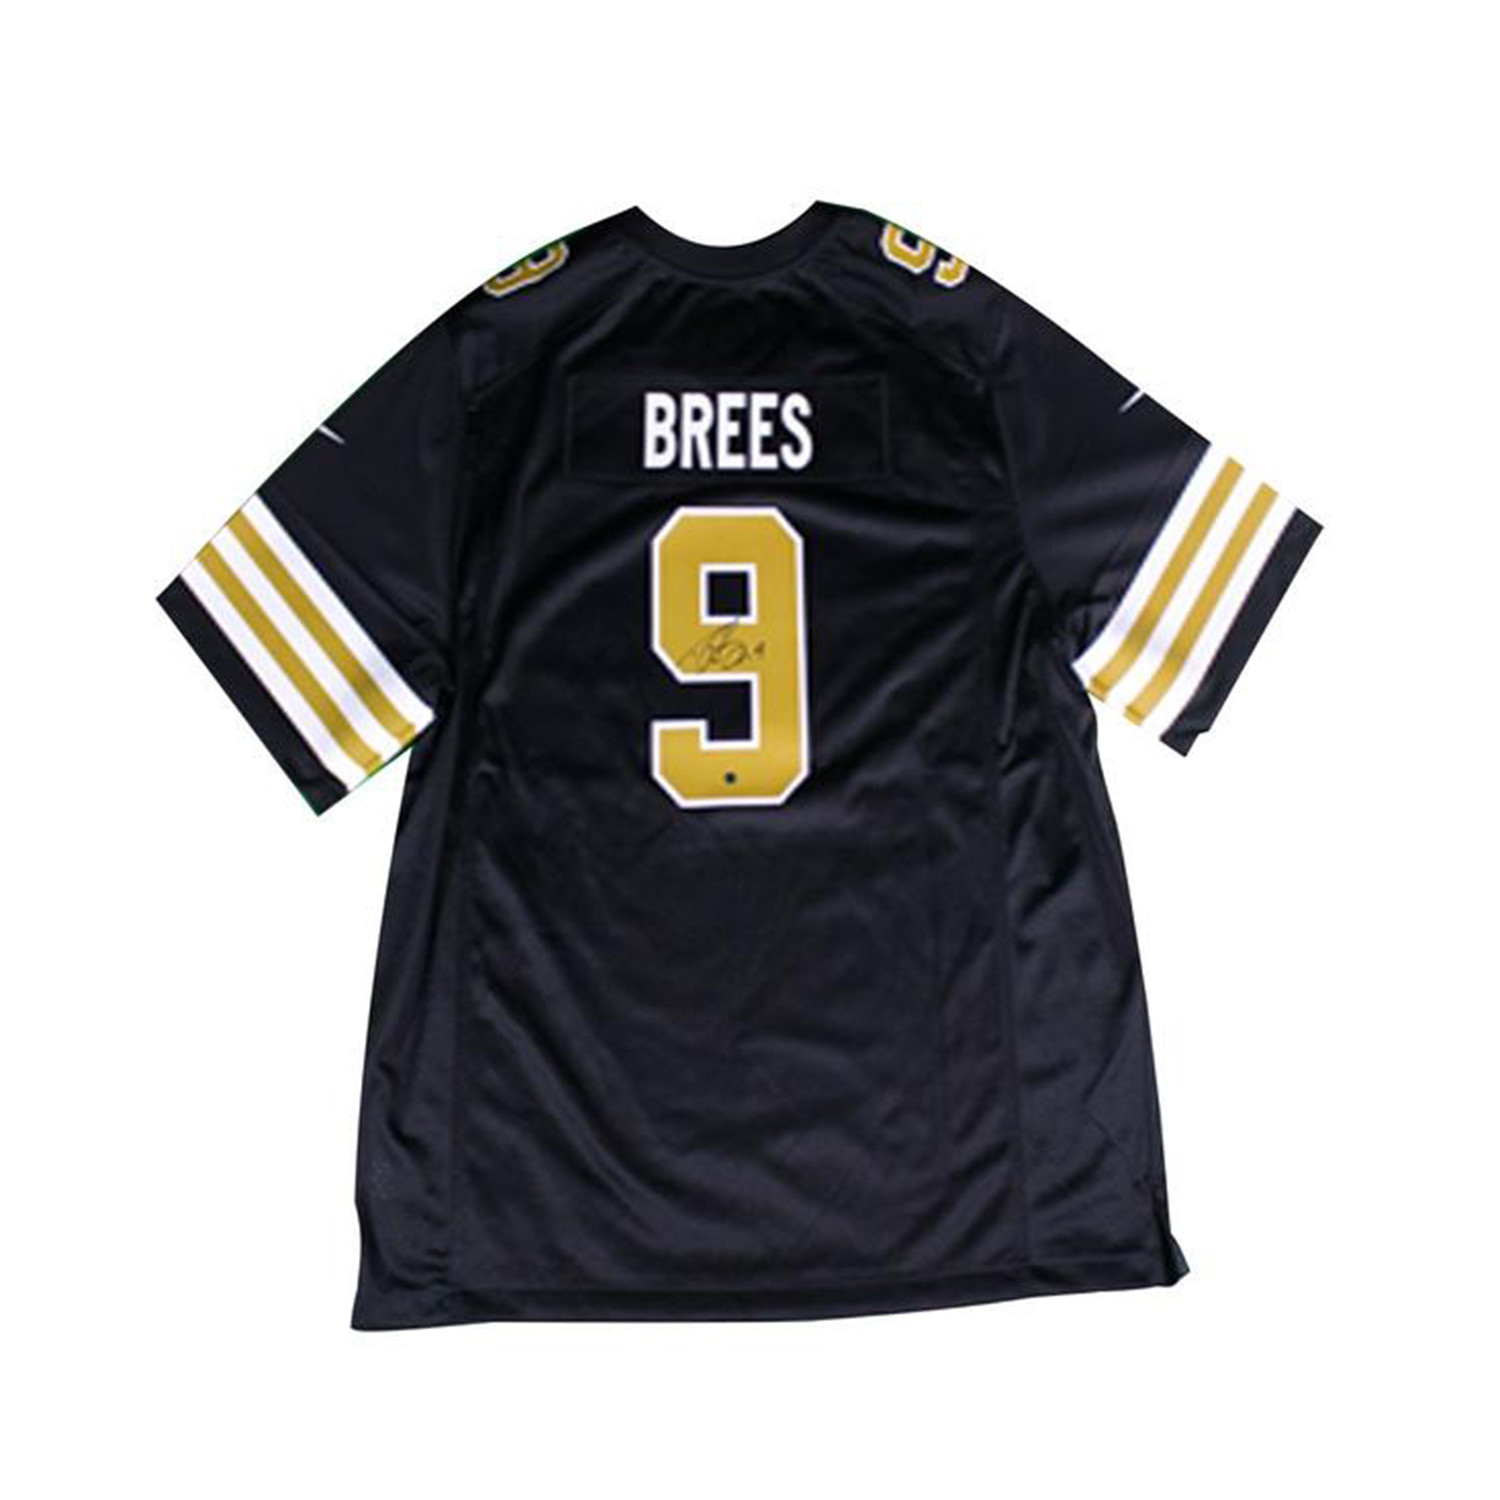 drew brees replica jersey